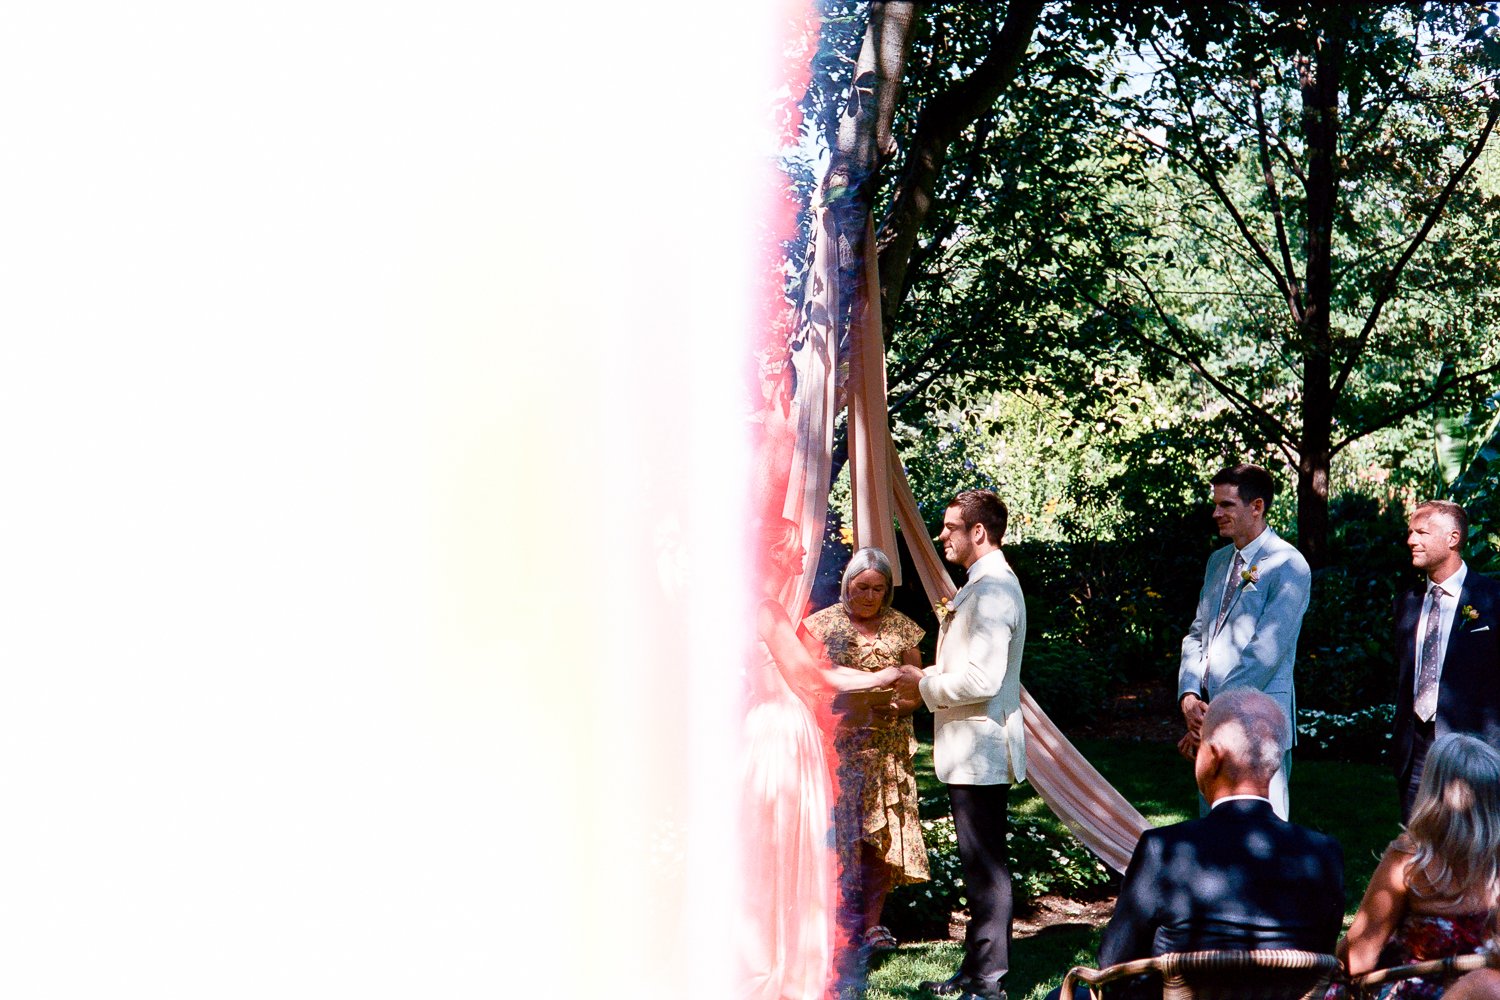 Linden-Gardens-Wedding-Venue-Okanagan-Penticton-Photography-Film-Analog-9.JPG